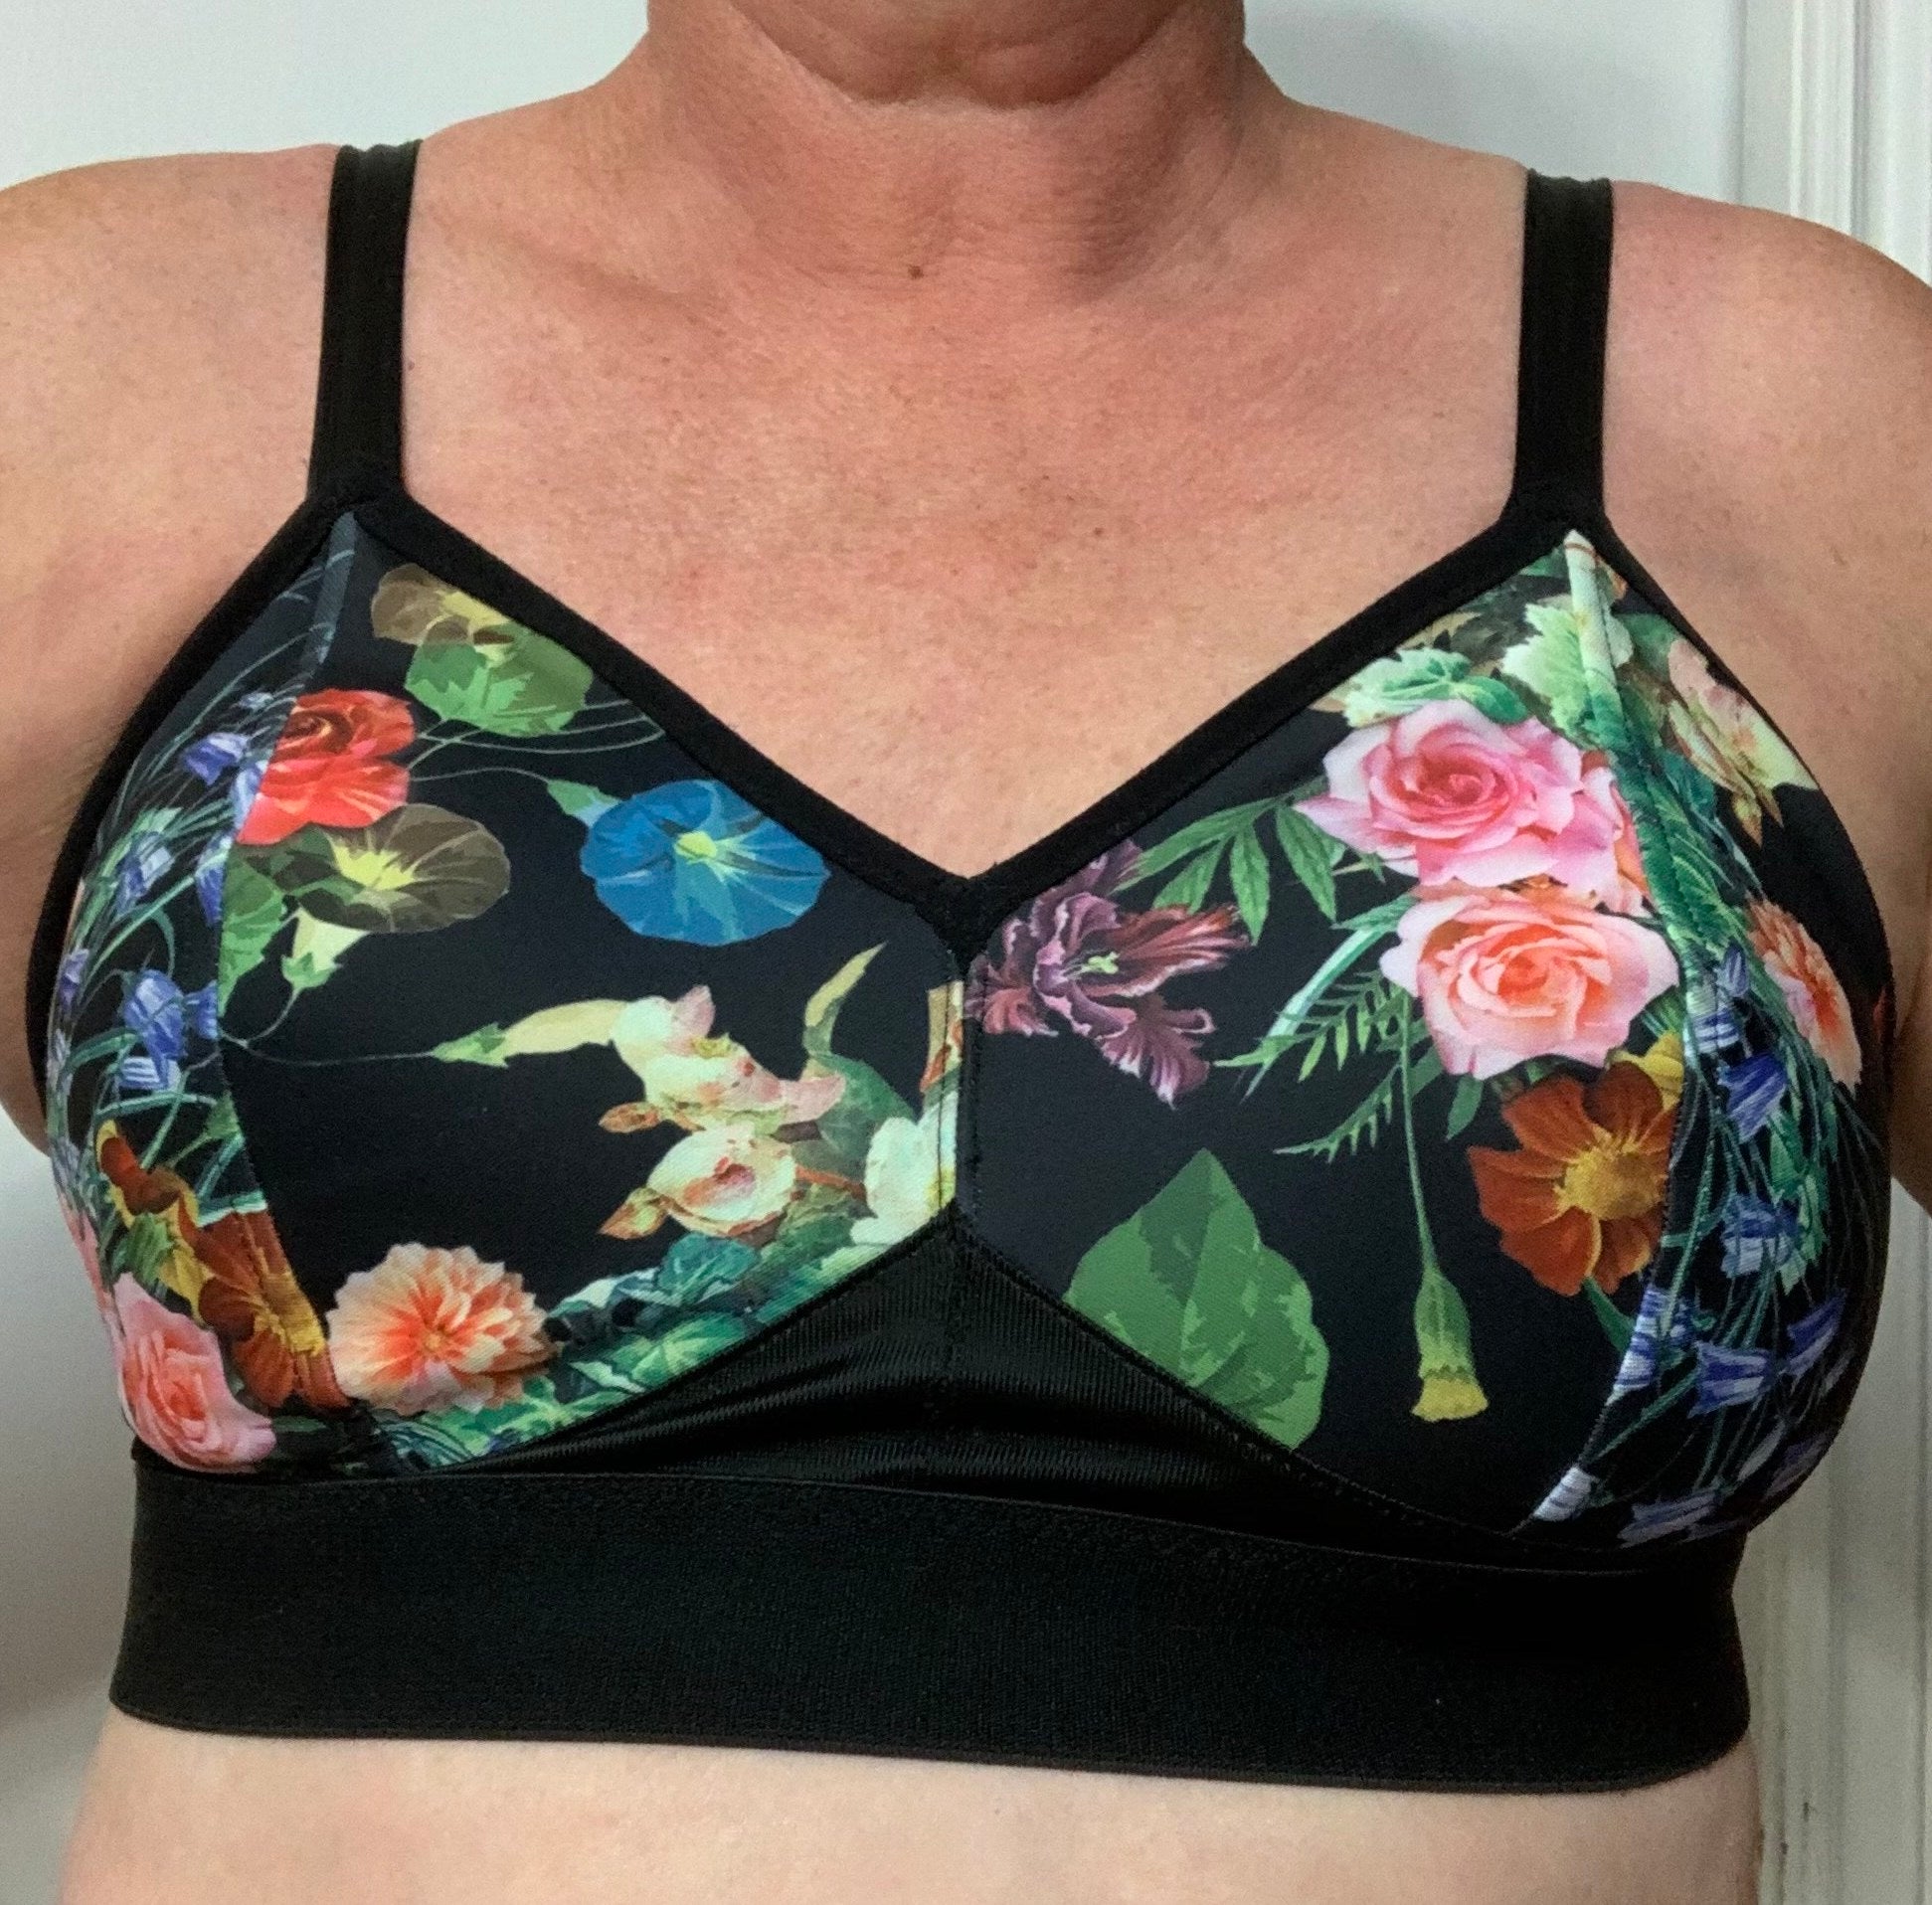 Custom Bra Fitting in Omaha  Women's fittings, specialty bra